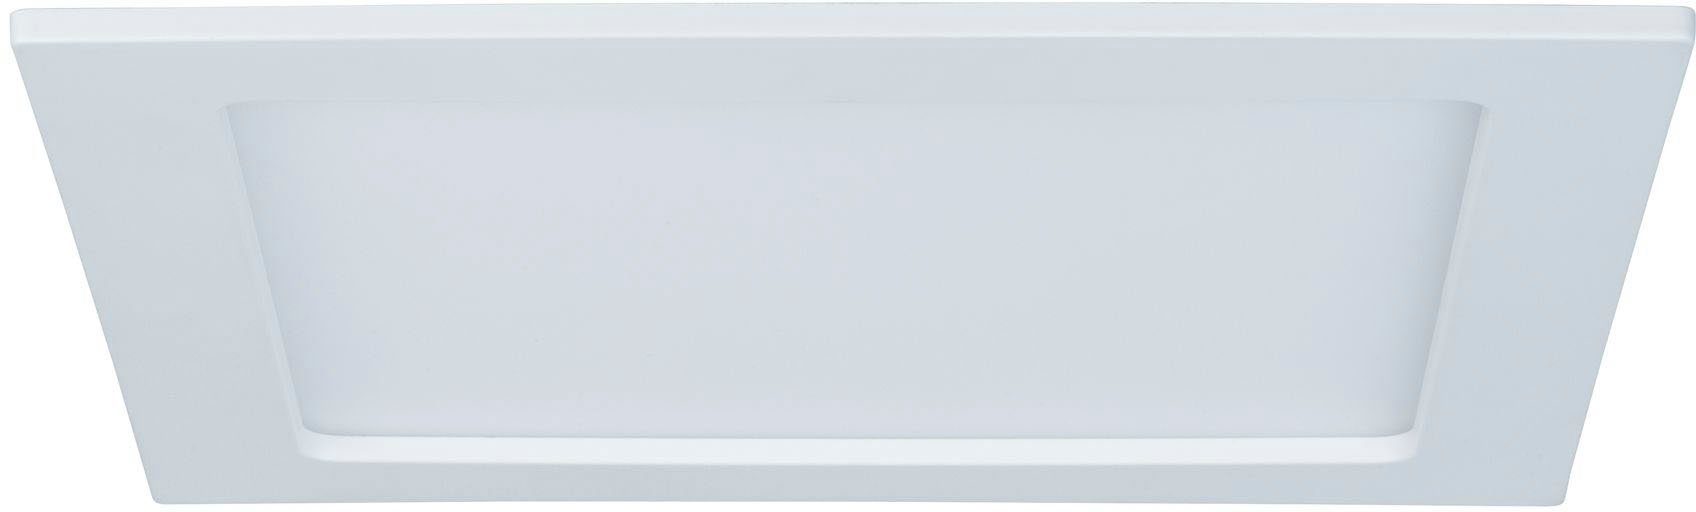 Neutralweiß, Paulmann integriert, Deckenleuchte, fest Badleuchte 9W Dimmbar IP44 LED Panel Weiß LED eckig spritzwassergeschützt